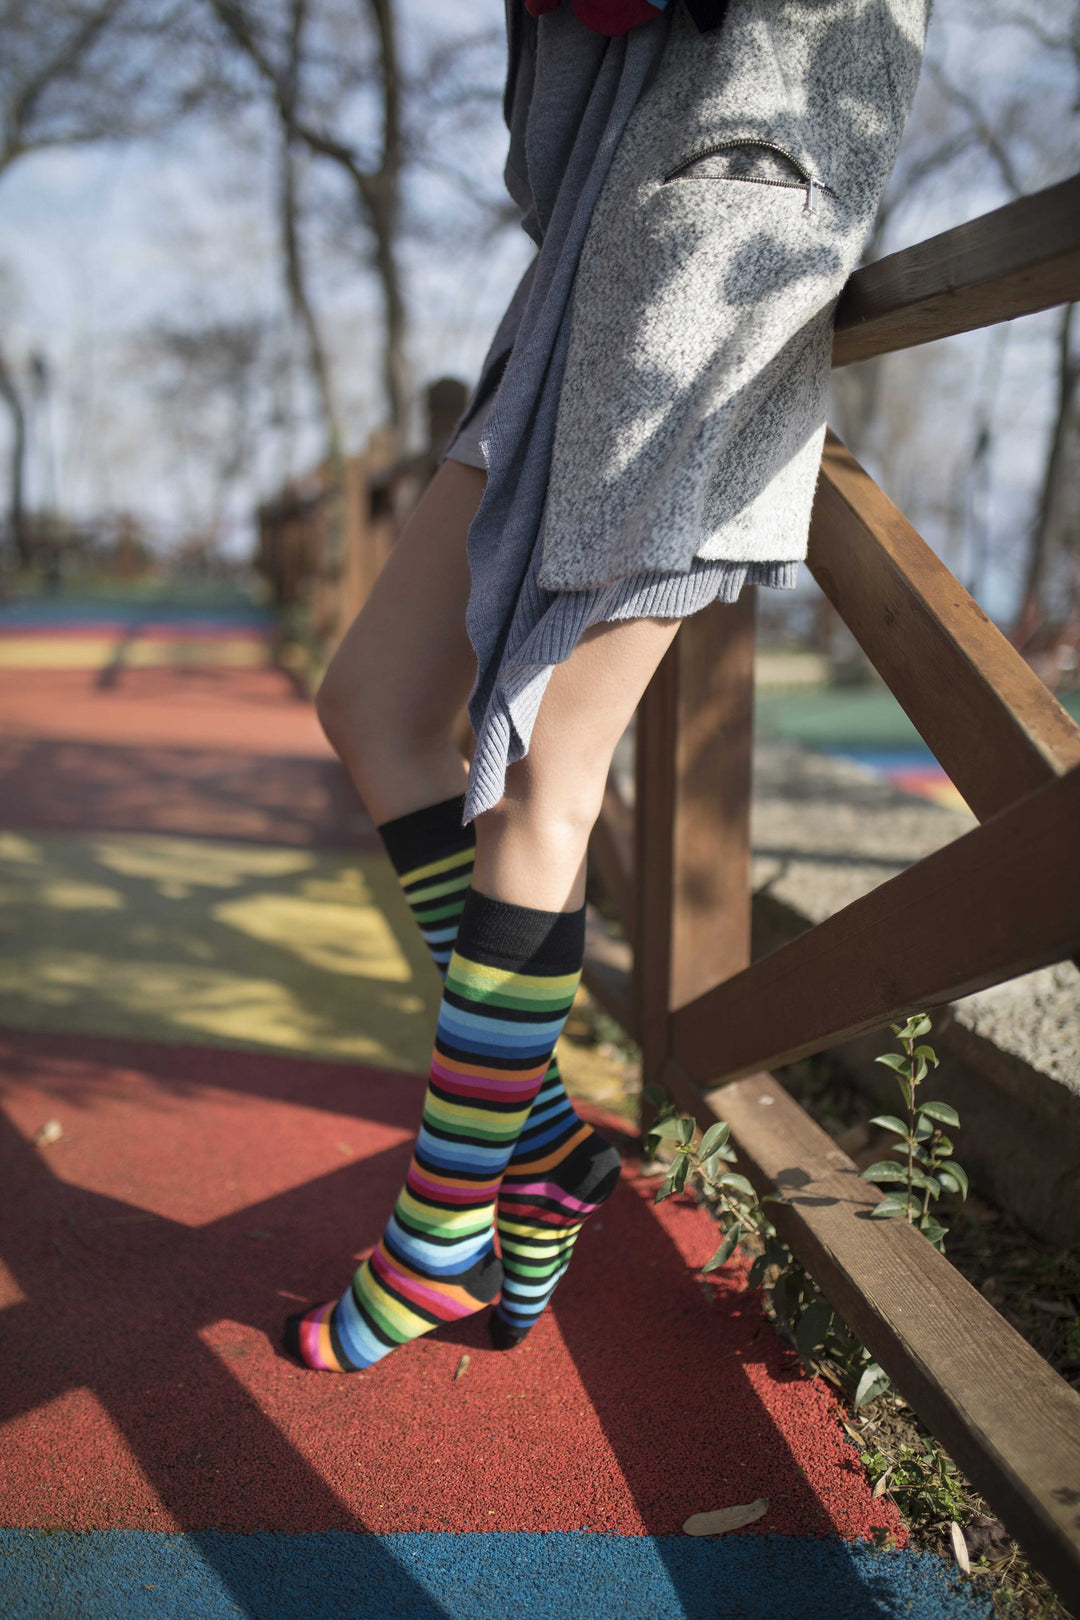 Women's Stylish Stripe Knee High Socks Set - Socks n Socks